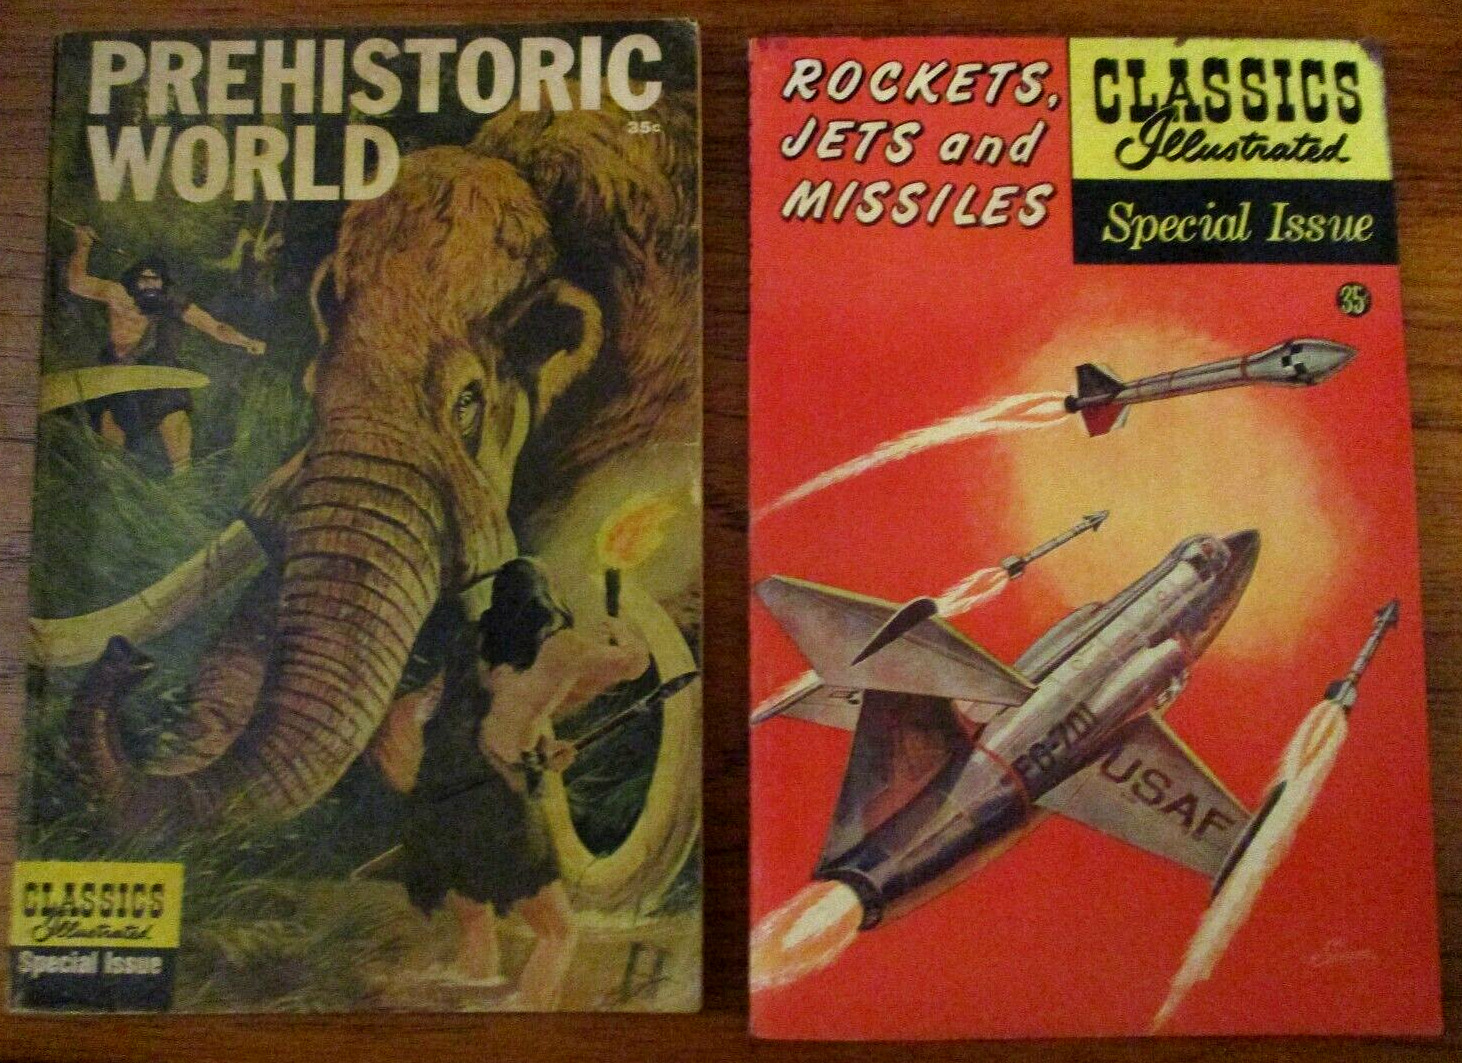 1950's CLASSICS ILLUSTRATED COMICS SPECIAL ED 2 Prehistoric World Rockets Jets